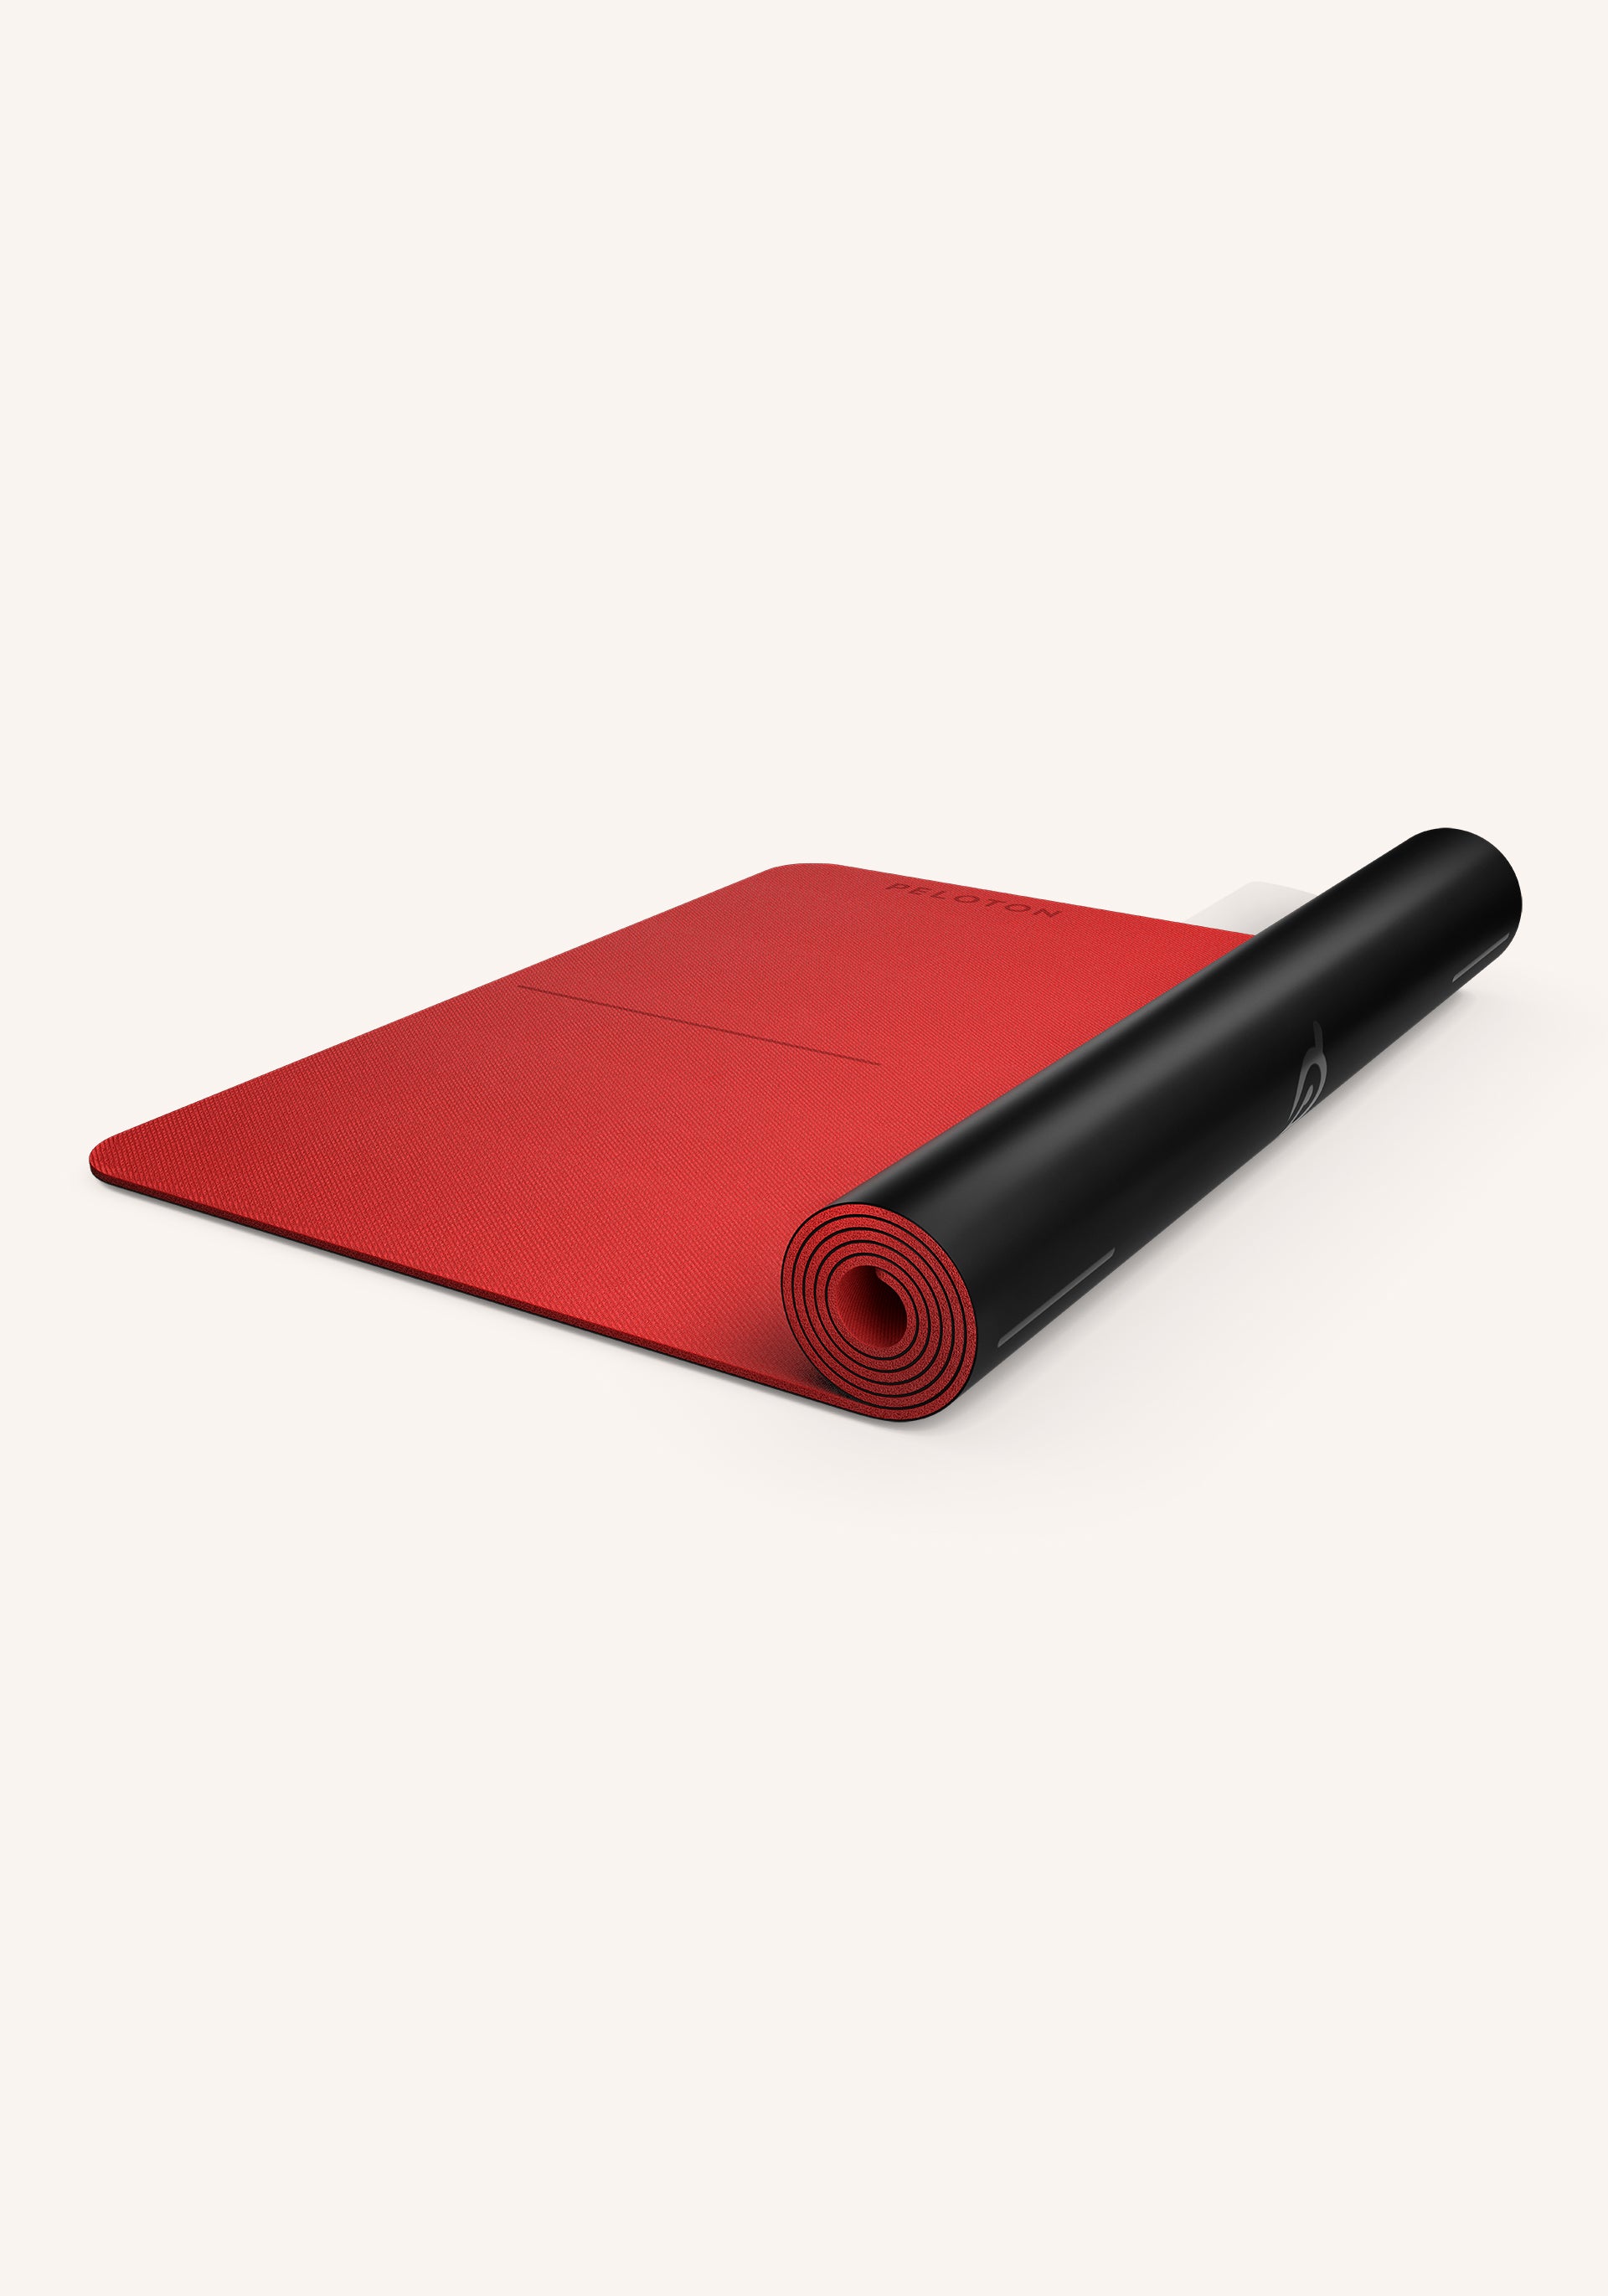 Whear Small Yoga Mat,Non-Slip Texture Exercise & Workout Mat